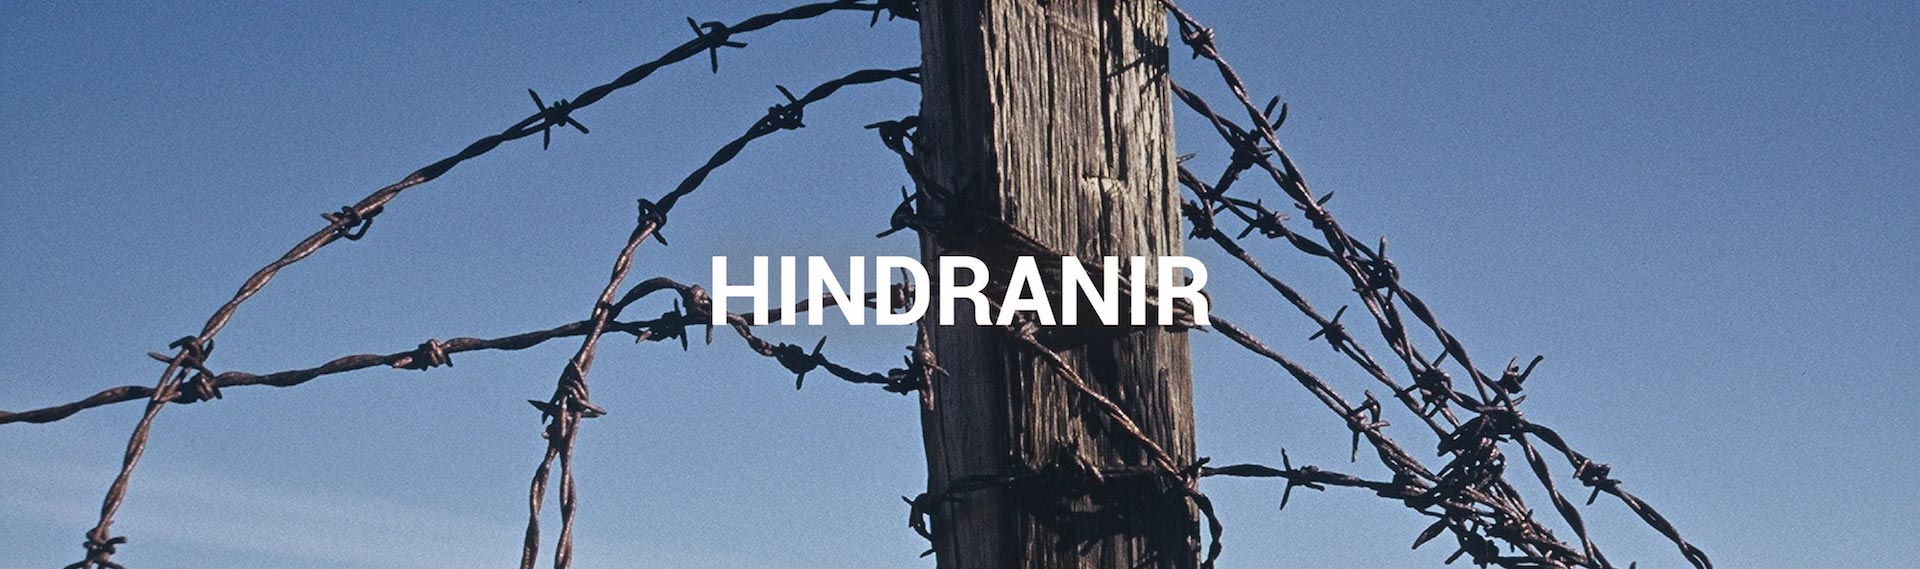 Hindranir